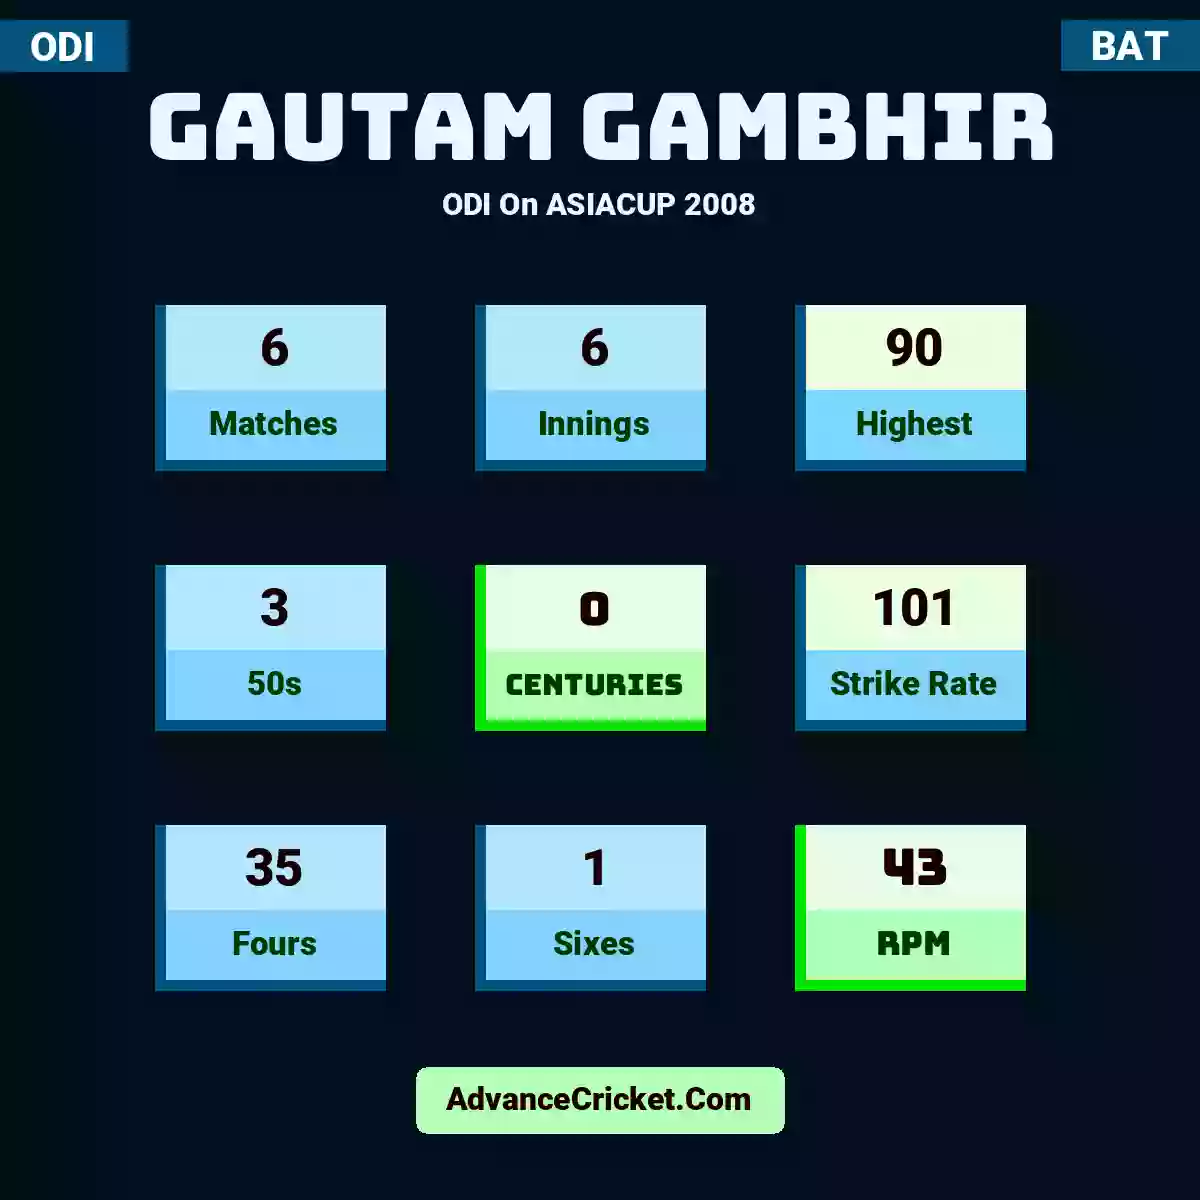 Gautam Gambhir ODI  On ASIACUP 2008, Gautam Gambhir played 6 matches, scored 90 runs as highest, 3 half-centuries, and 0 centuries, with a strike rate of 101. G.Gambhir hit 35 fours and 1 sixes, with an RPM of 43.